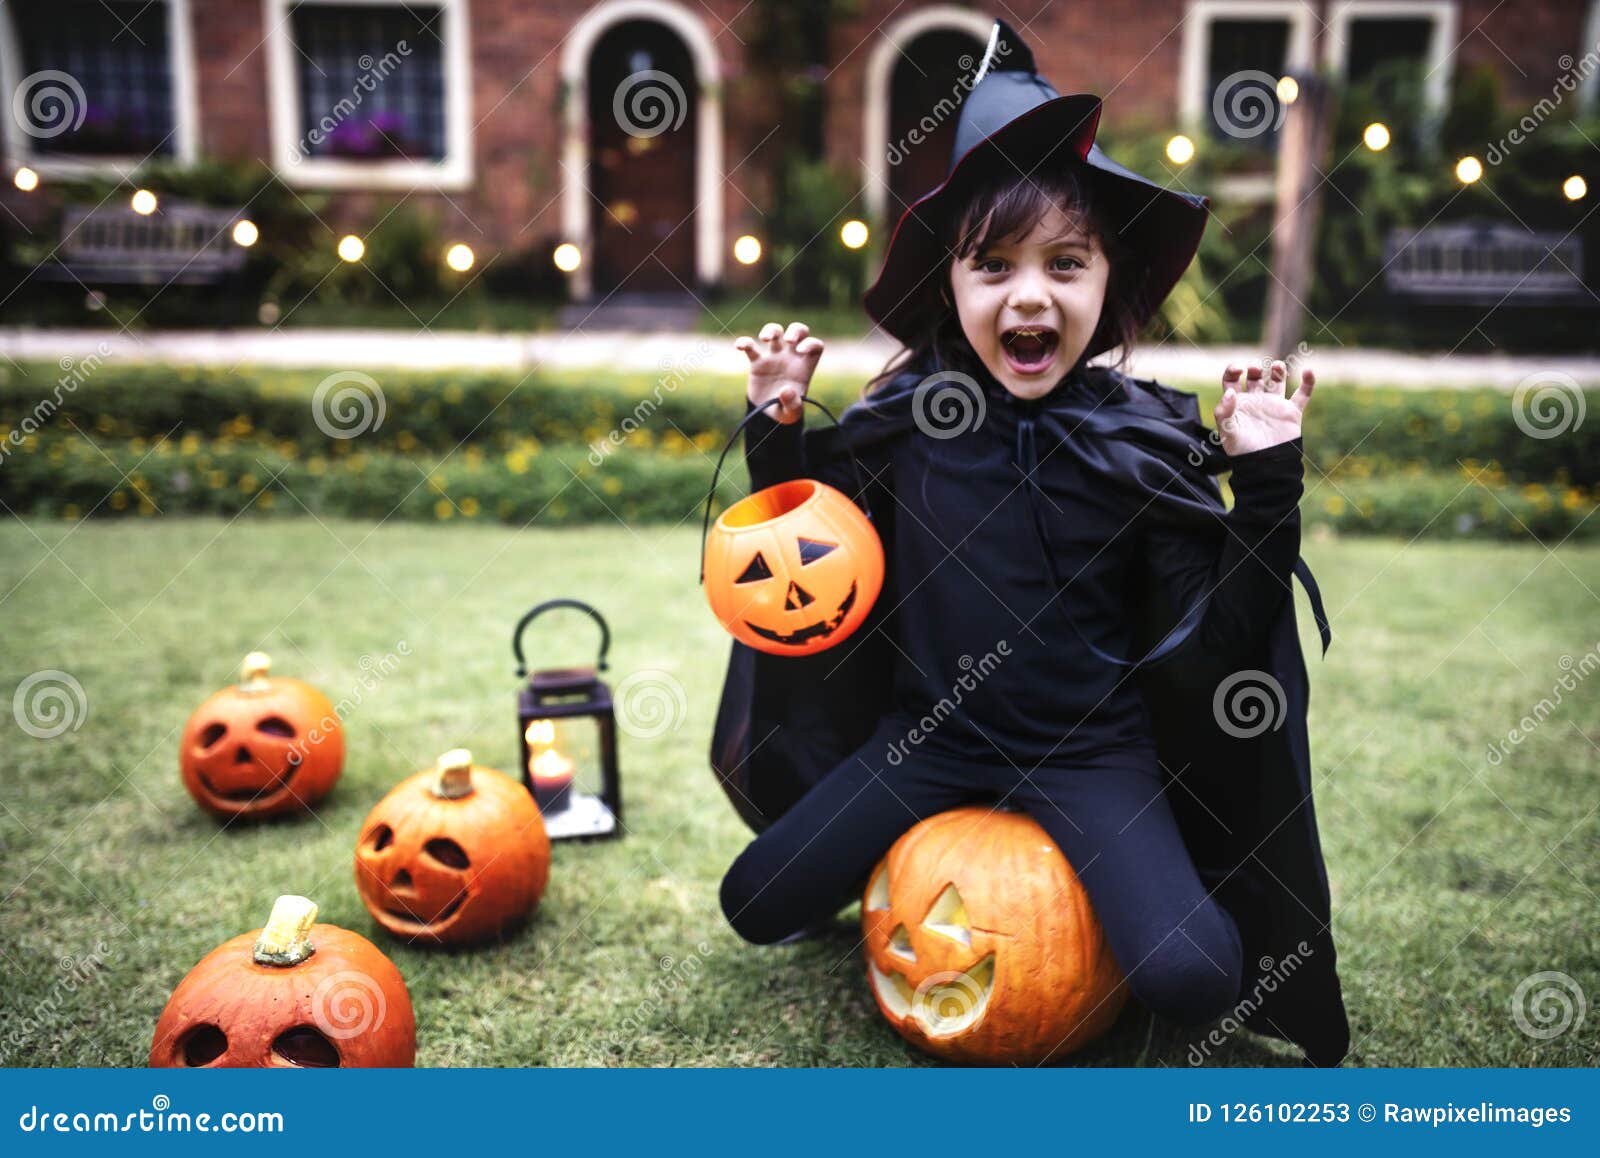 Young Girl Enjoying the Halloween Festival Stock Image - Image of ...